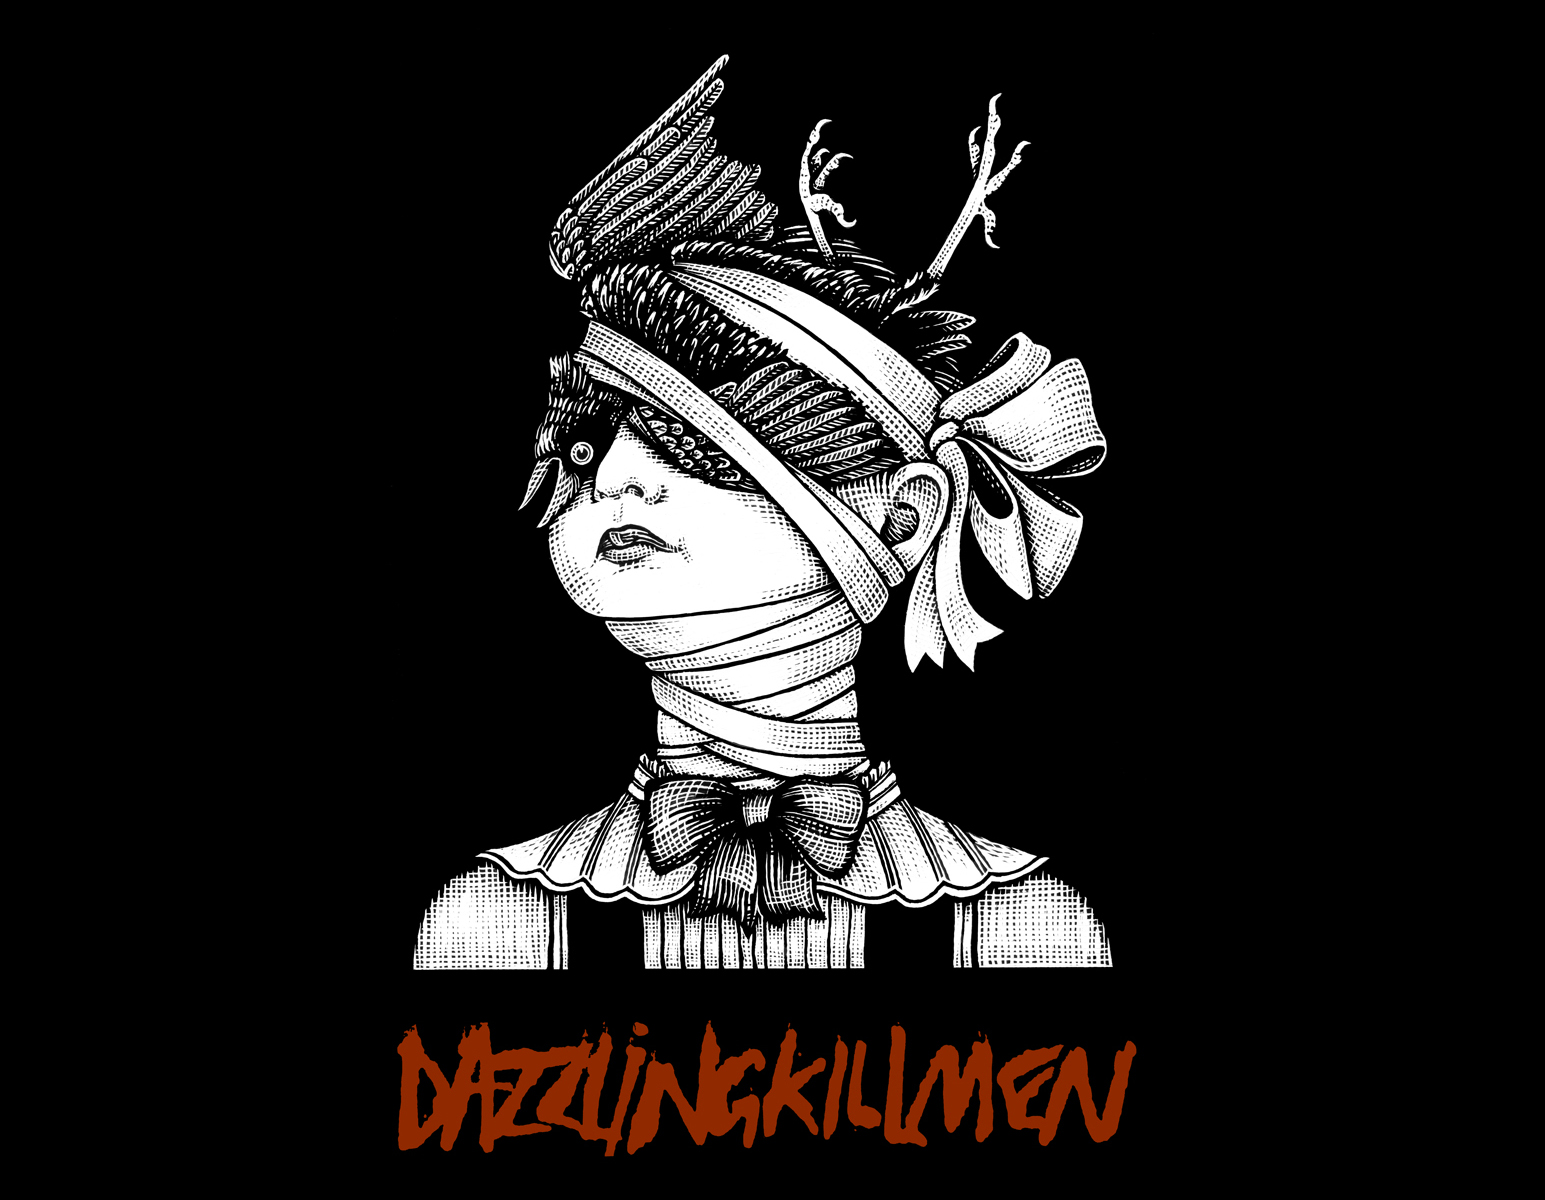   Dazzling Killmen,  Crow Head .  T-Shirt Design .  Drawn 2013, printed 2017. Pen and ink, Scratch board. 